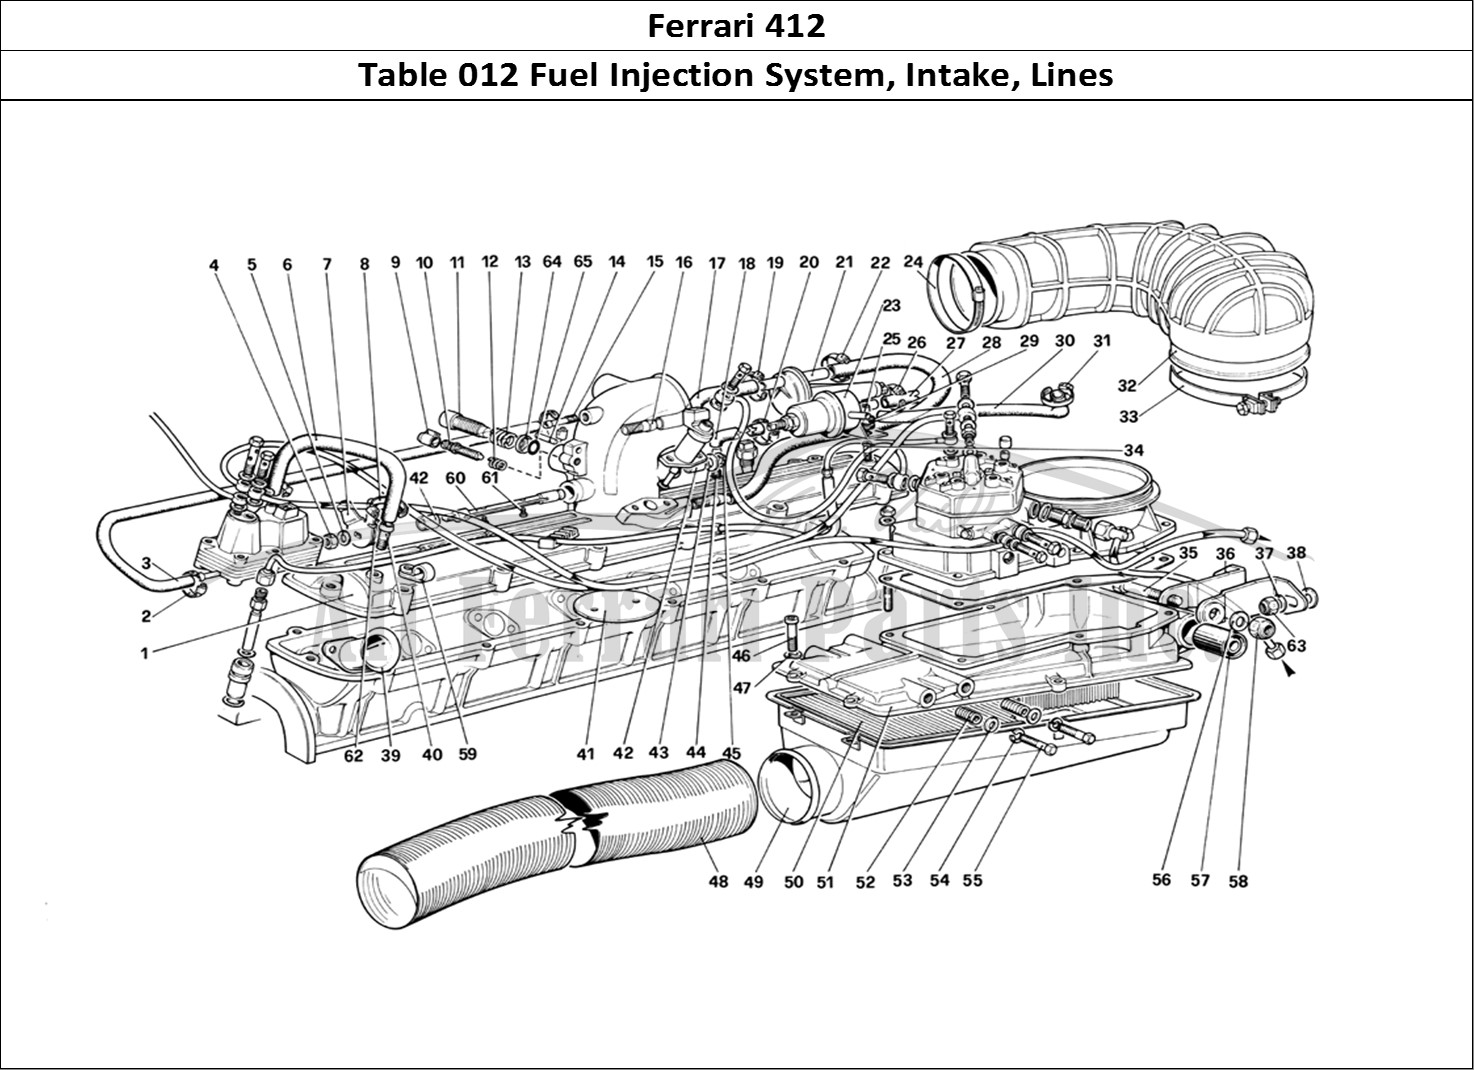 Ferrari Parts Ferrari 412 (Mechanical) Page 012 Fuel Injection System - A